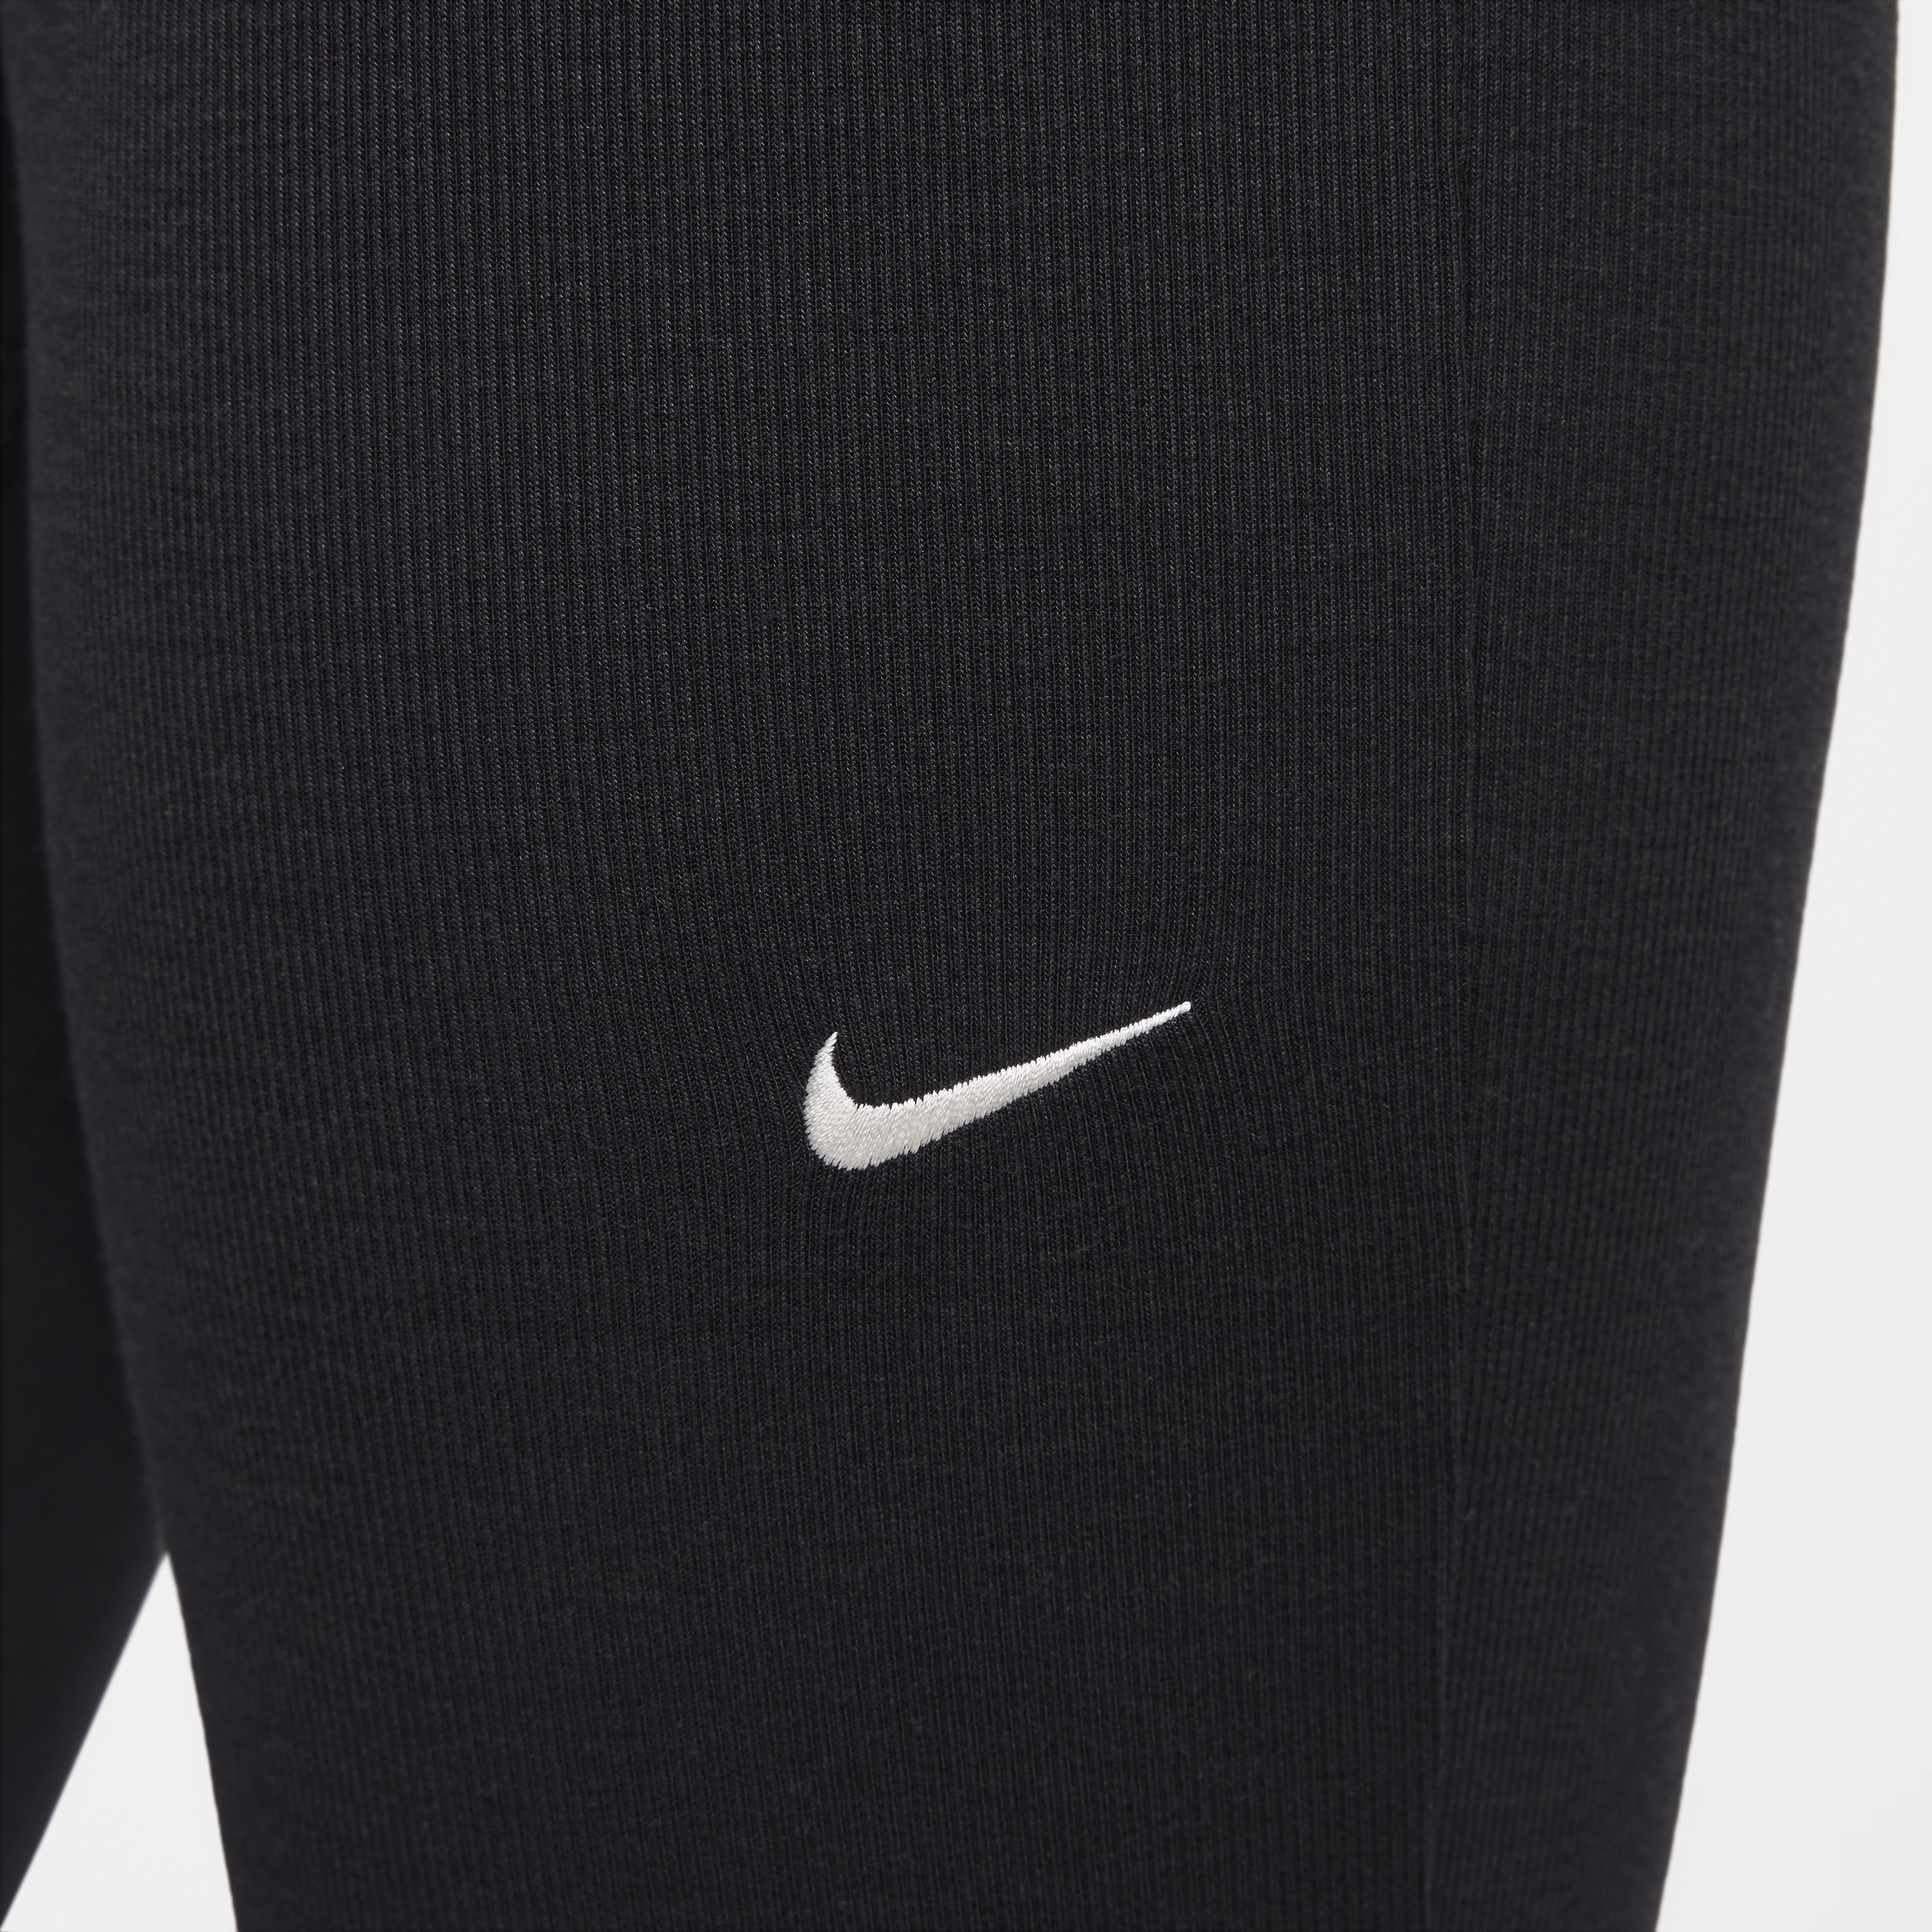 Nike Sportswear Chill Knit strakke legging met wijd uitlopende pijpen en mini-rib voor dames Zwart